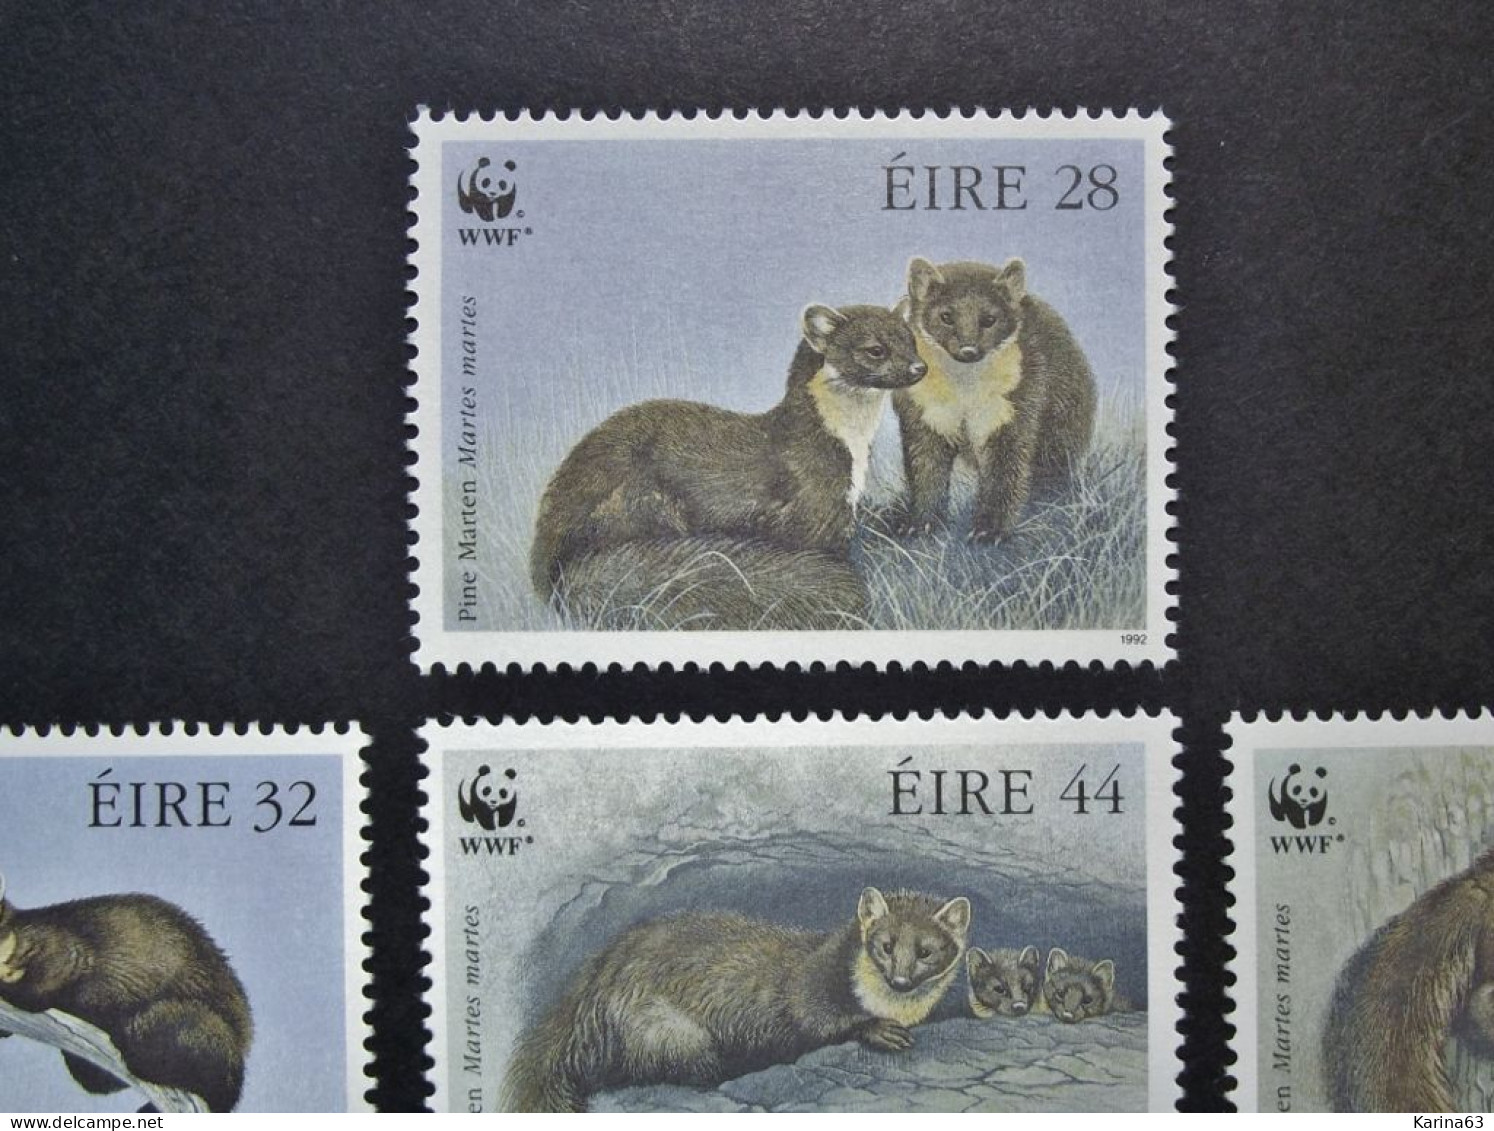 Ireland - Irelande - Eire - 1992 - Y&T N° 801 / 804 ( 4 Val.) Fauna Of Ireland - Martre De Pin - WWF - MNH - Postfris - Neufs